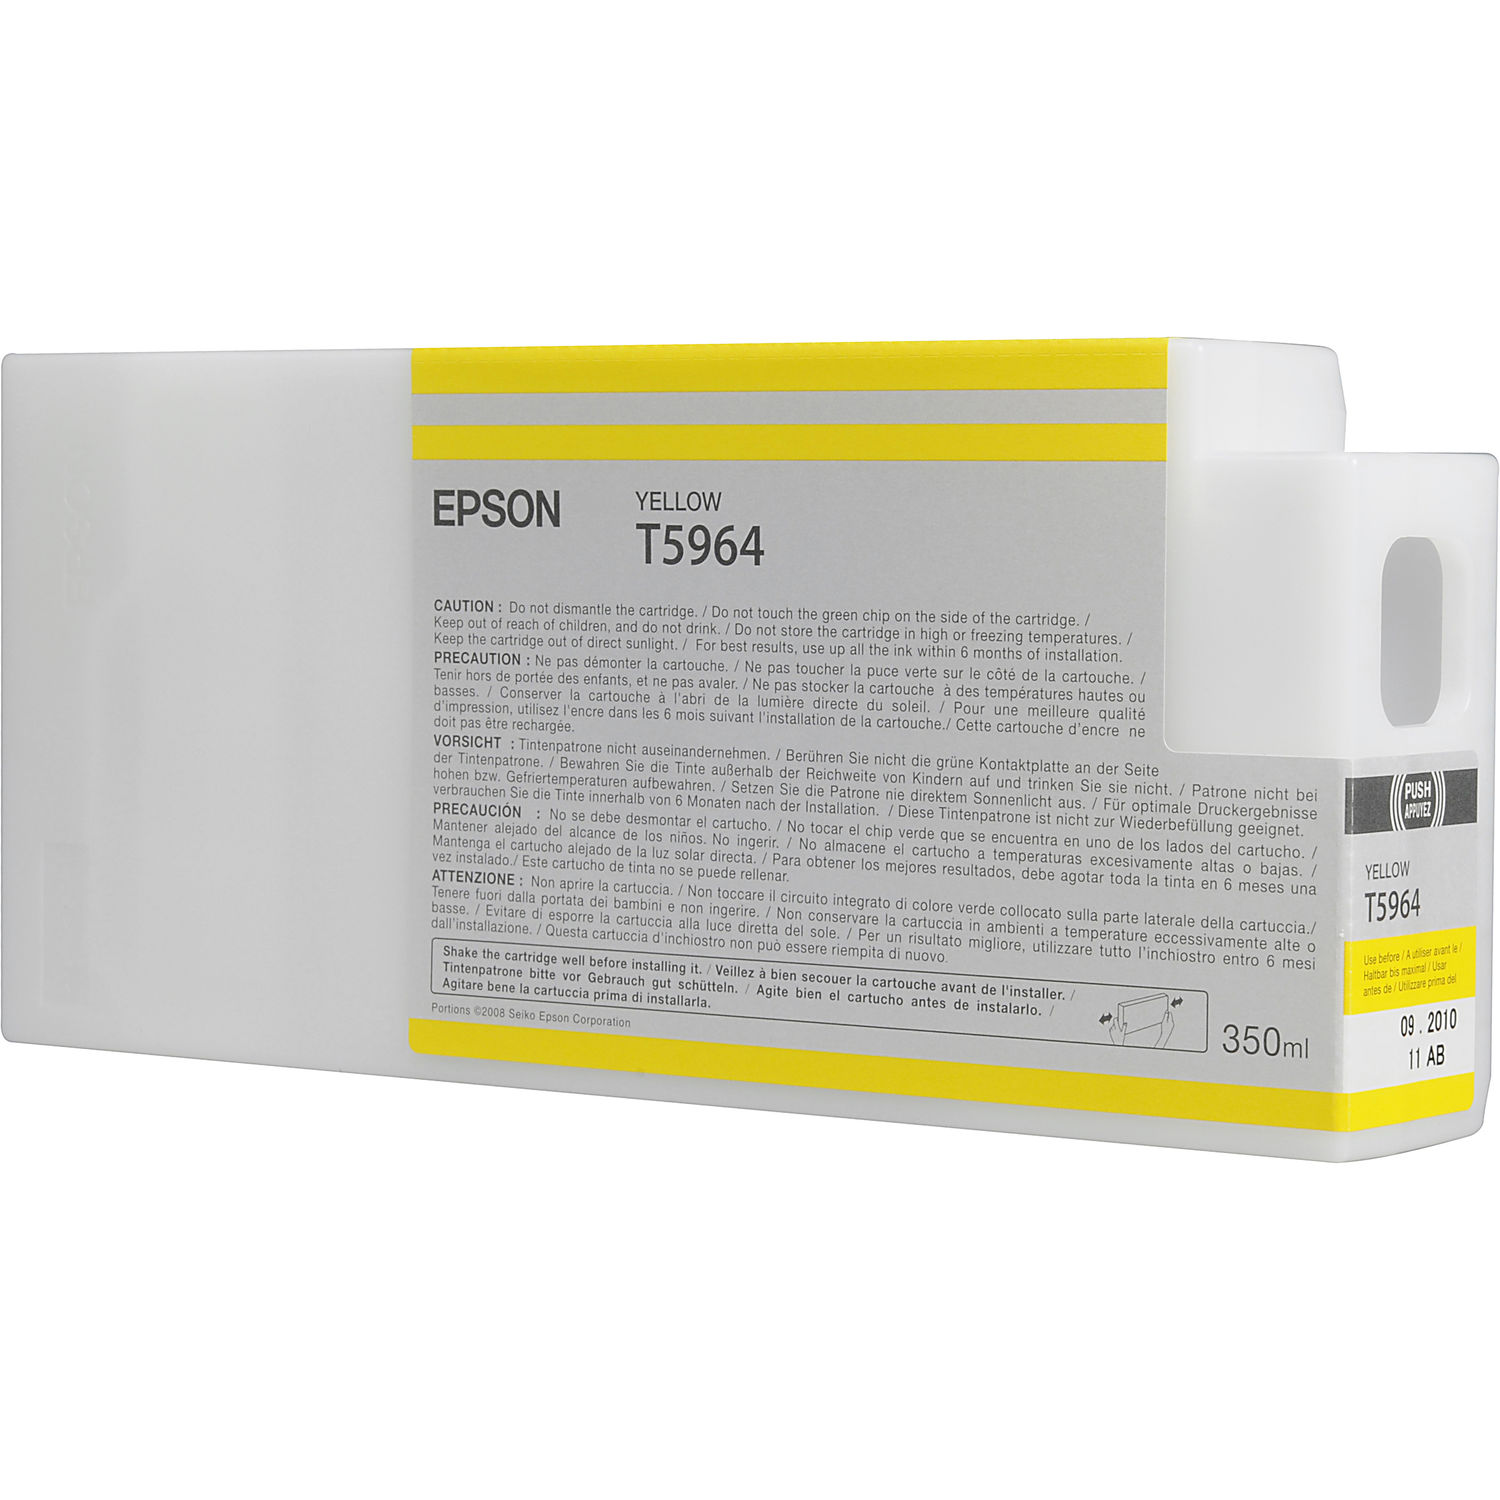 Cartucho de Tinta Epson Ultrachrome Hdr T596400 Amarillo para Impresoras Stylus Pro Seleccionadas 3